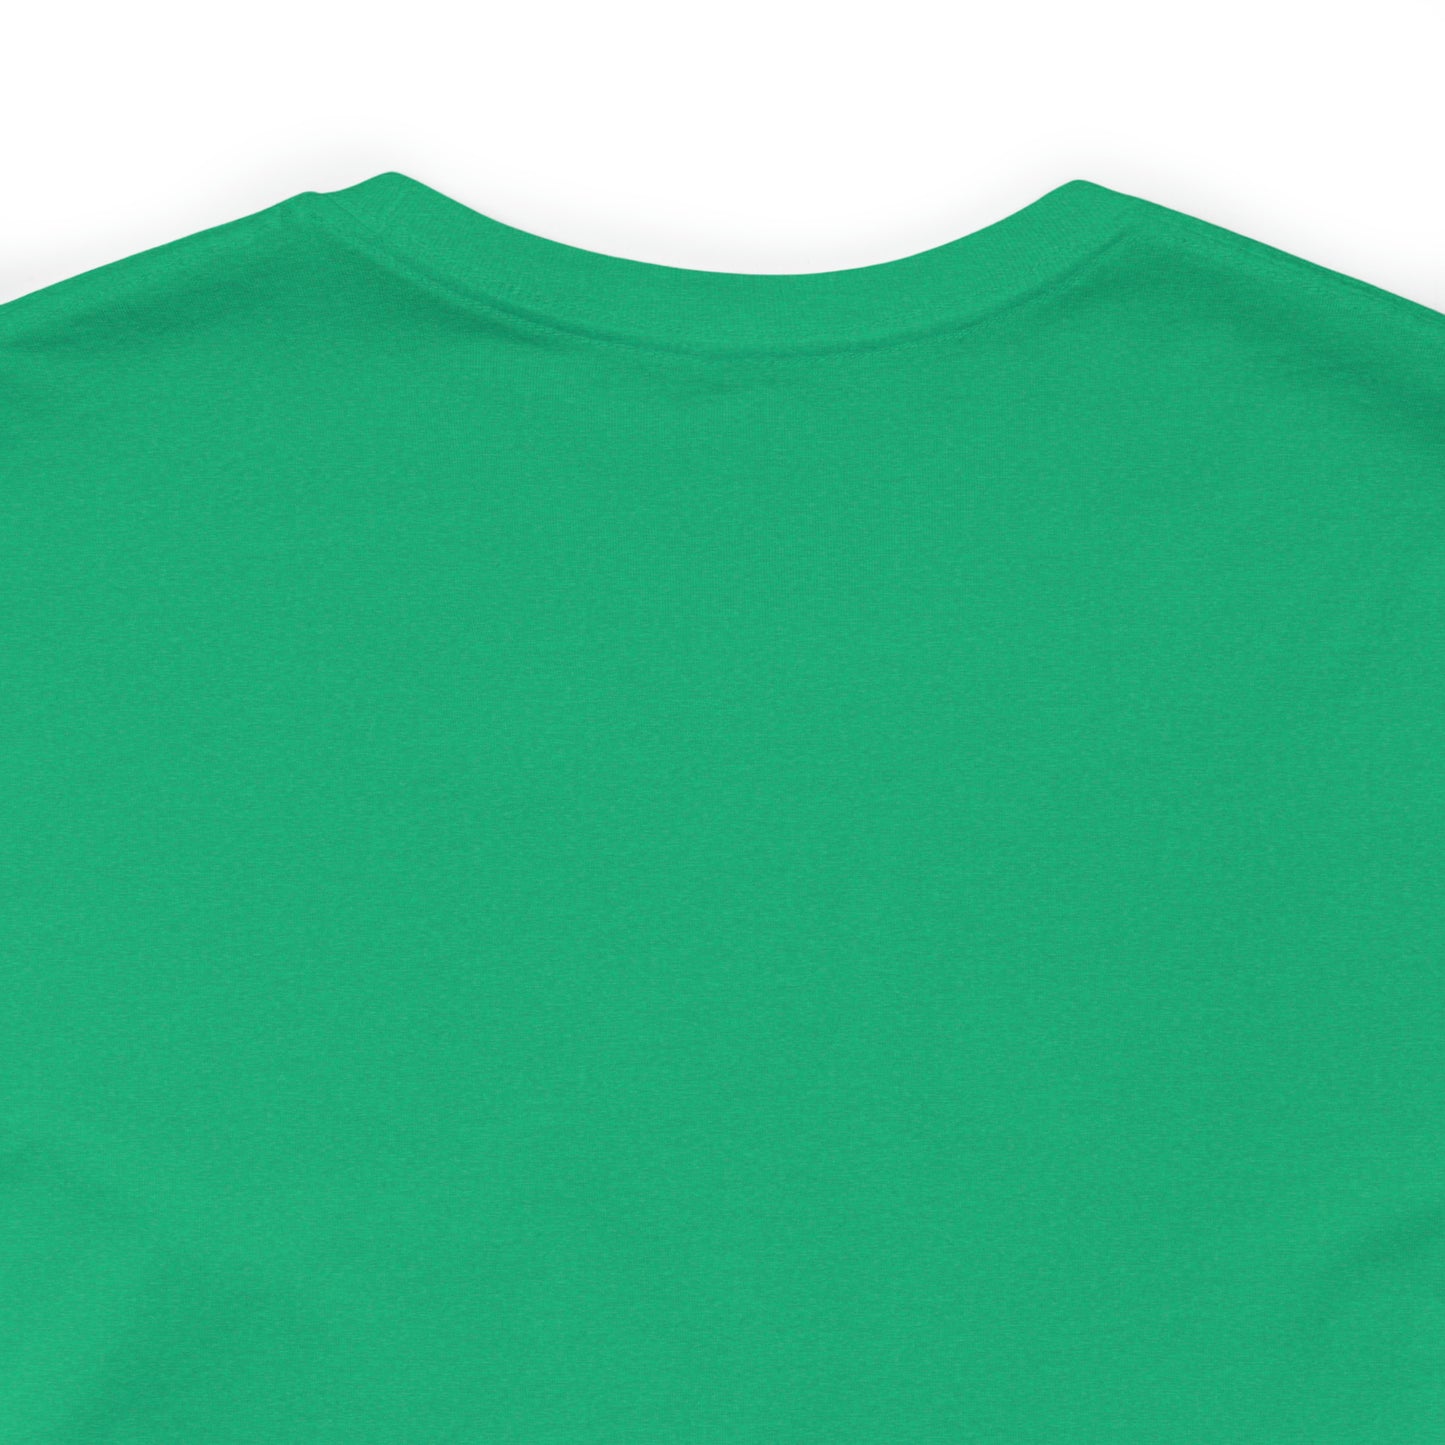 Harmon Crest Adult Shirt (Green/Gray)